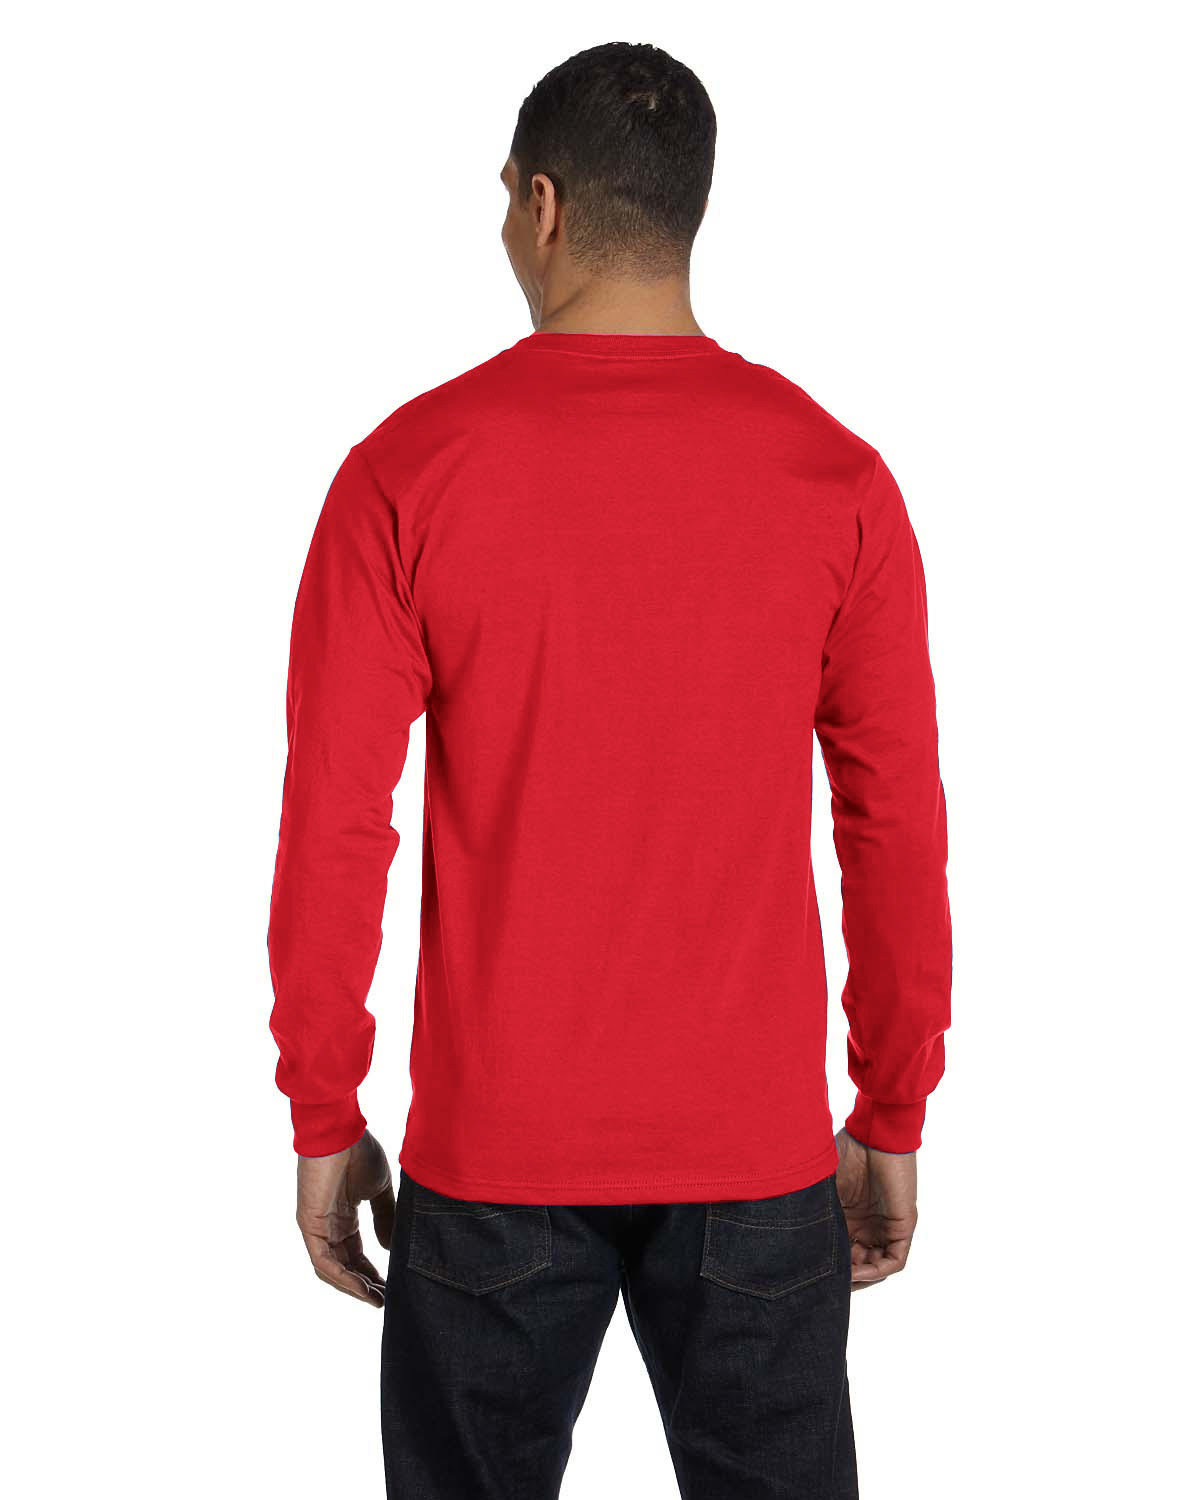 Hanes Men's 5.2 oz. ComfortSoft® Cotton Long-Sleeve T-Shirt | US ...